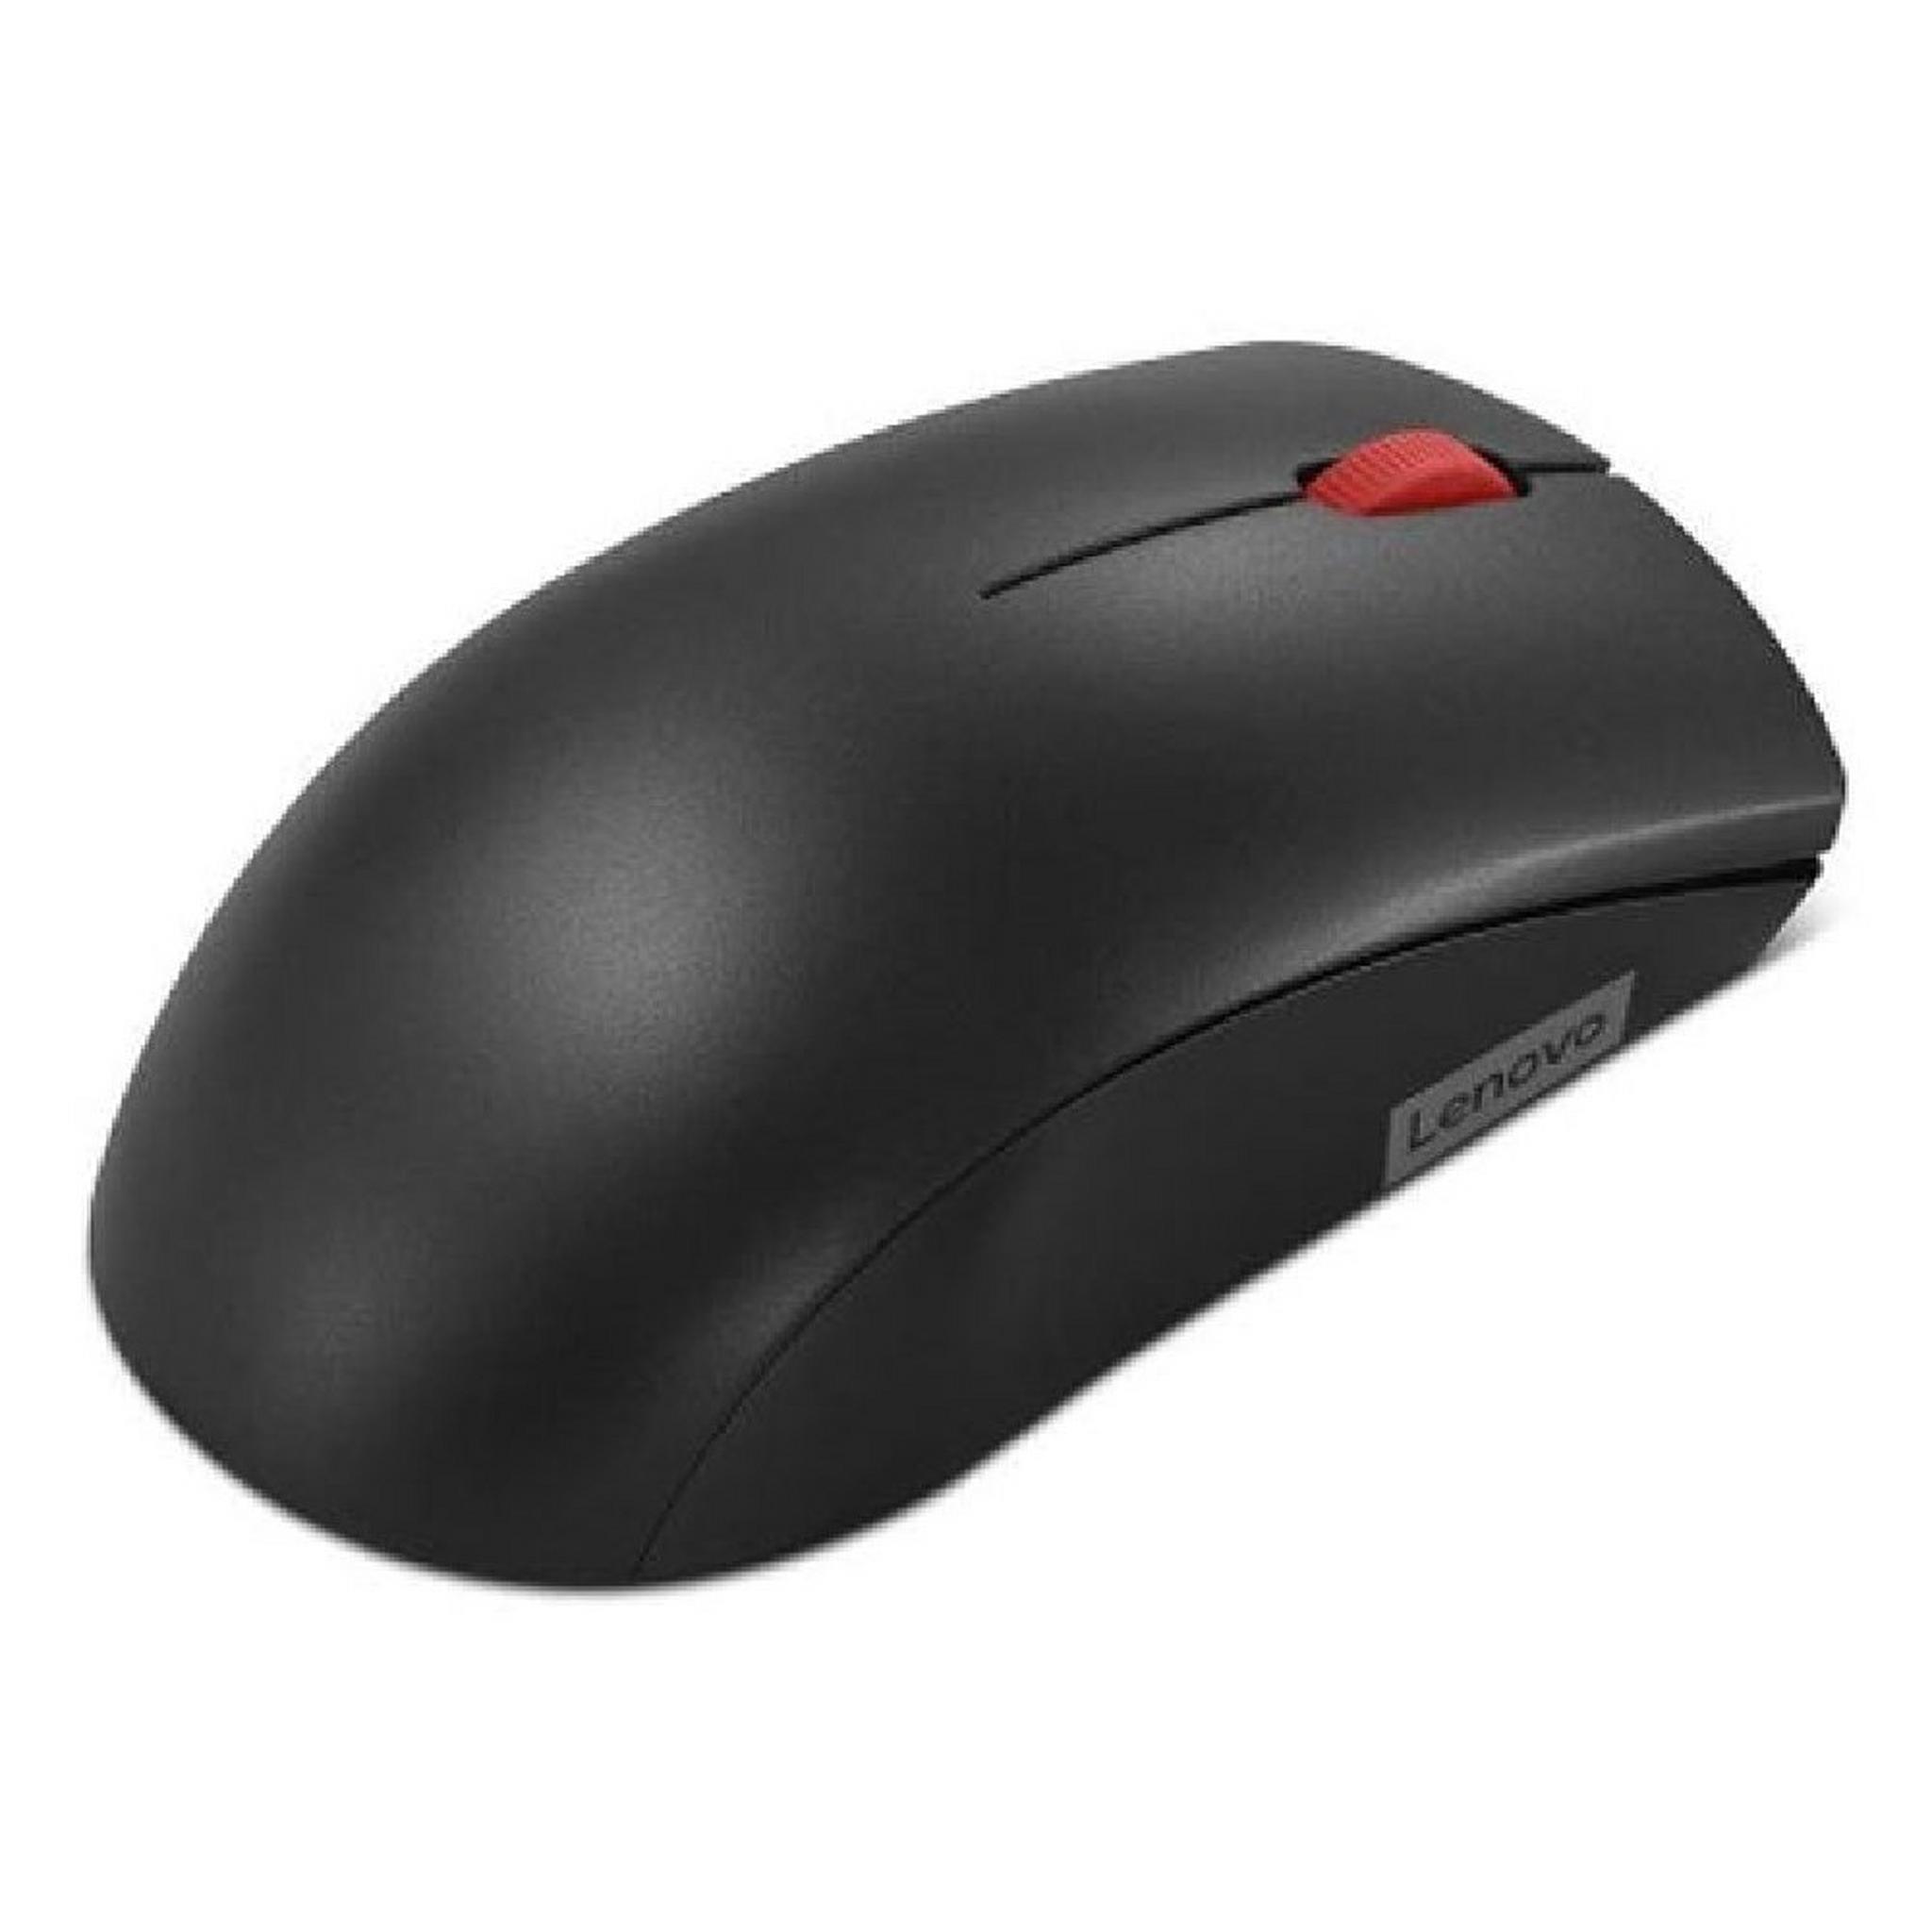 Lenovo 150 Wireless Mouse, LED optical sensor, 4Y51M70369 – Black